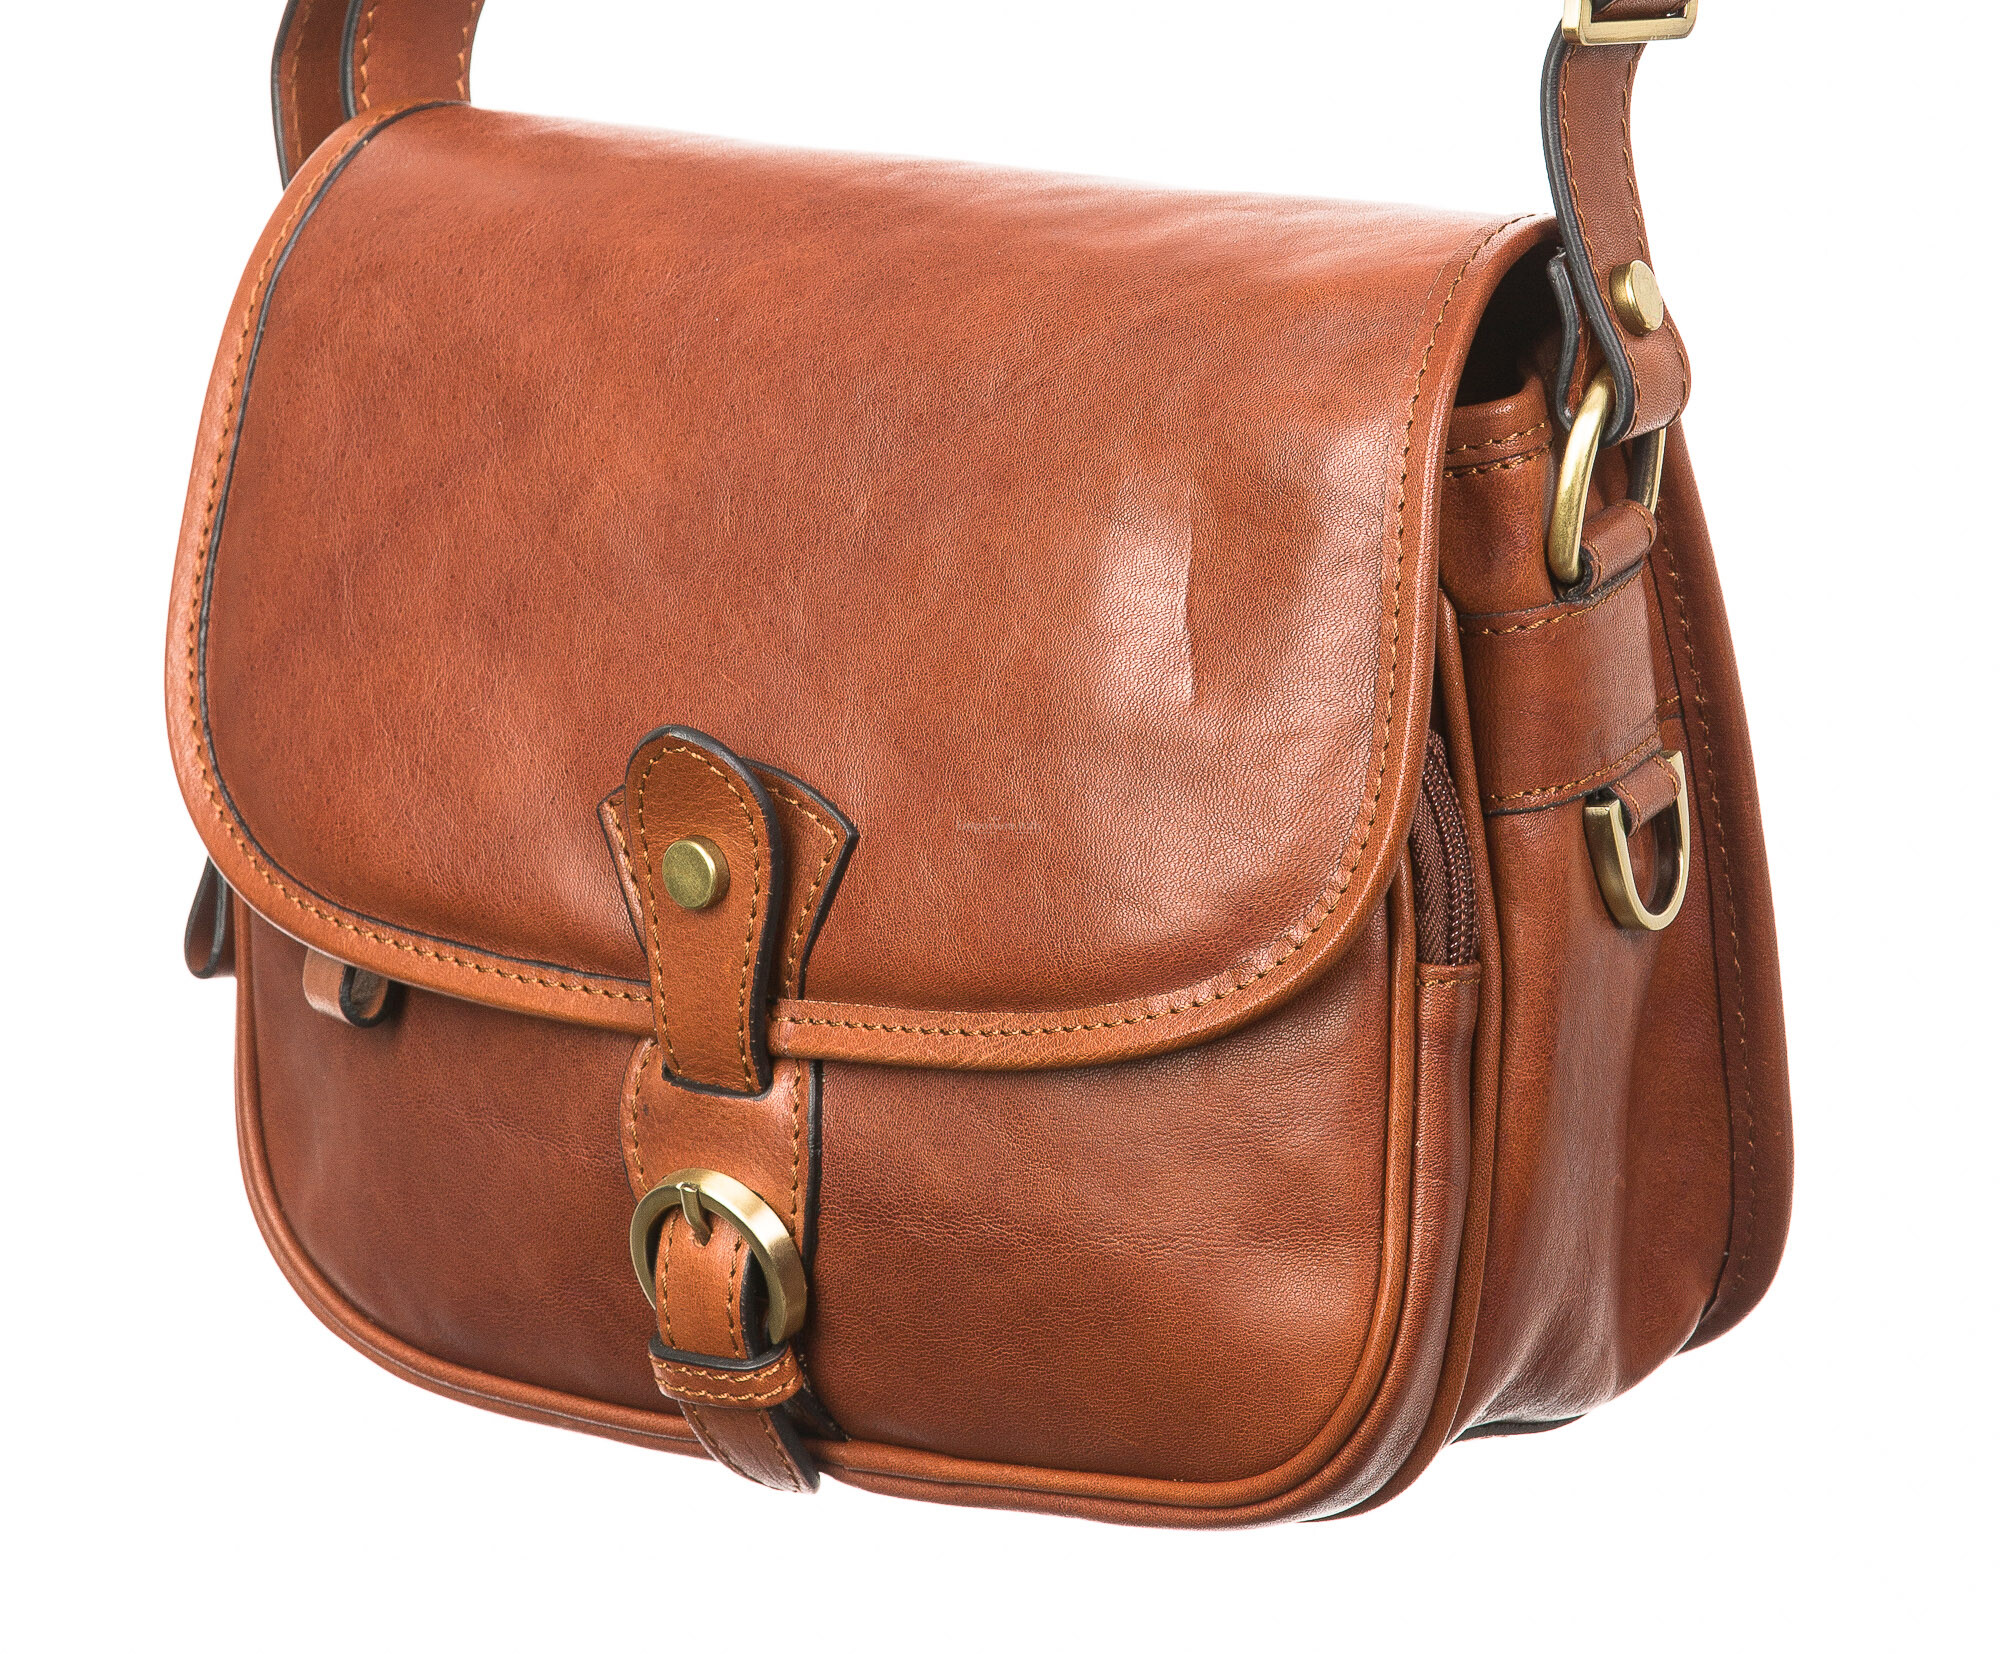 Ladies genuine leather bag SANTINI mod. LANA, HONEY, Made in Italy